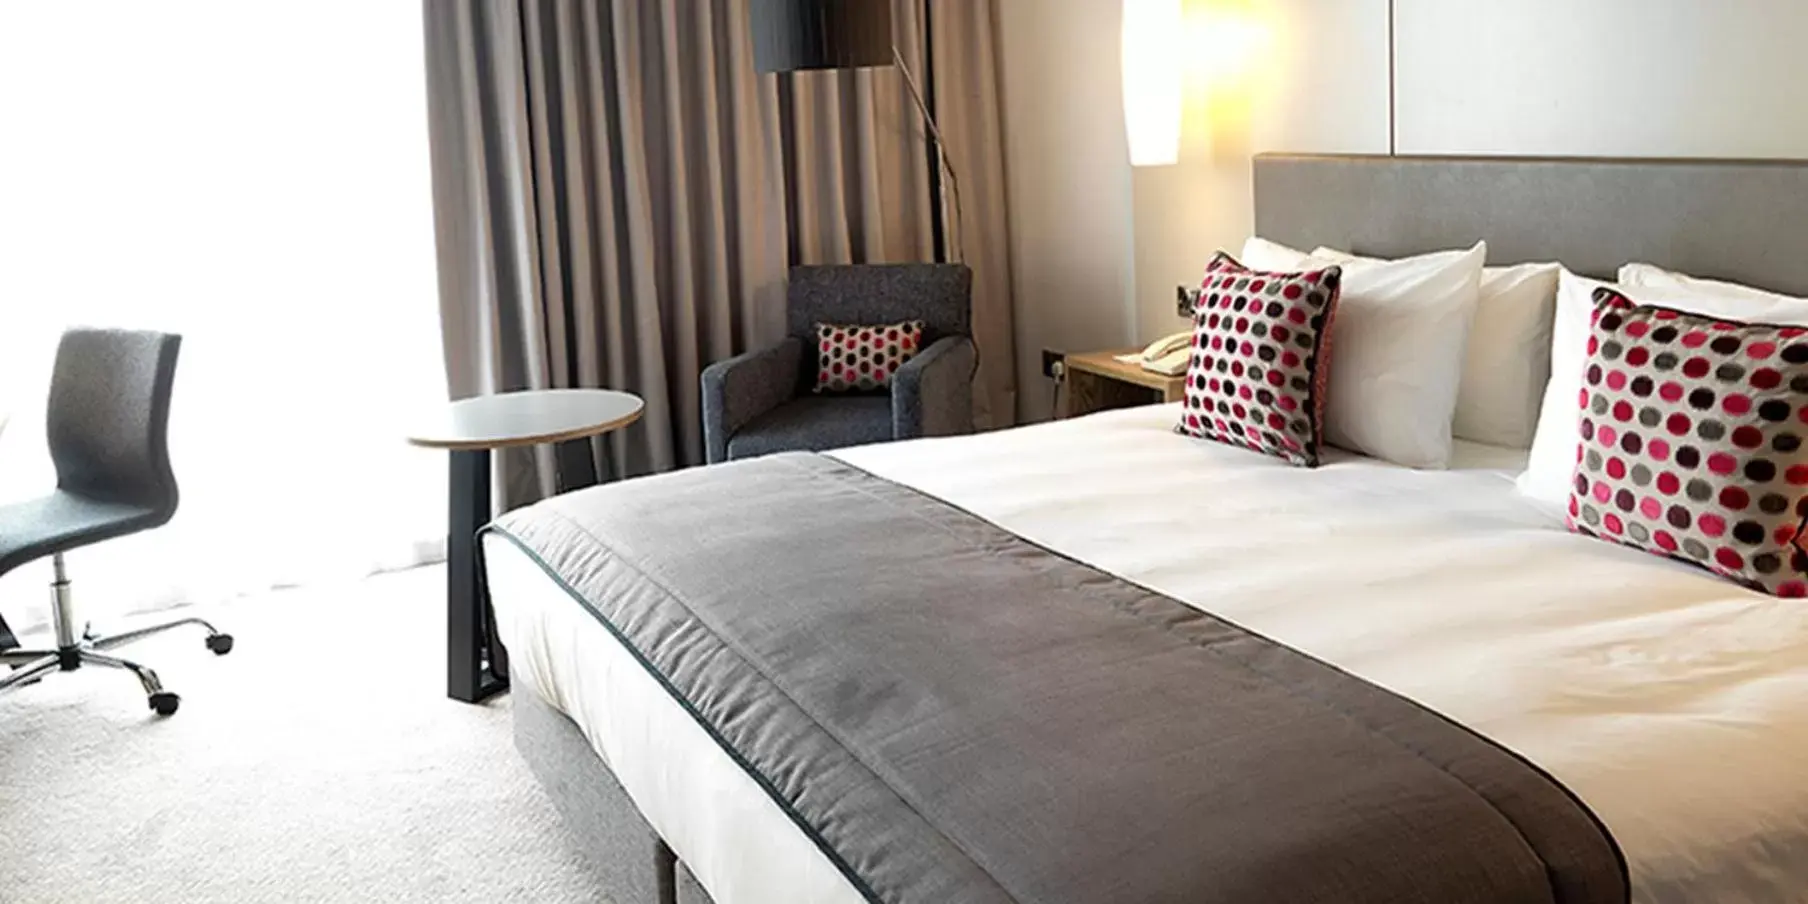 Bed, Room Photo in Crowne Plaza Harrogate, an IHG Hotel